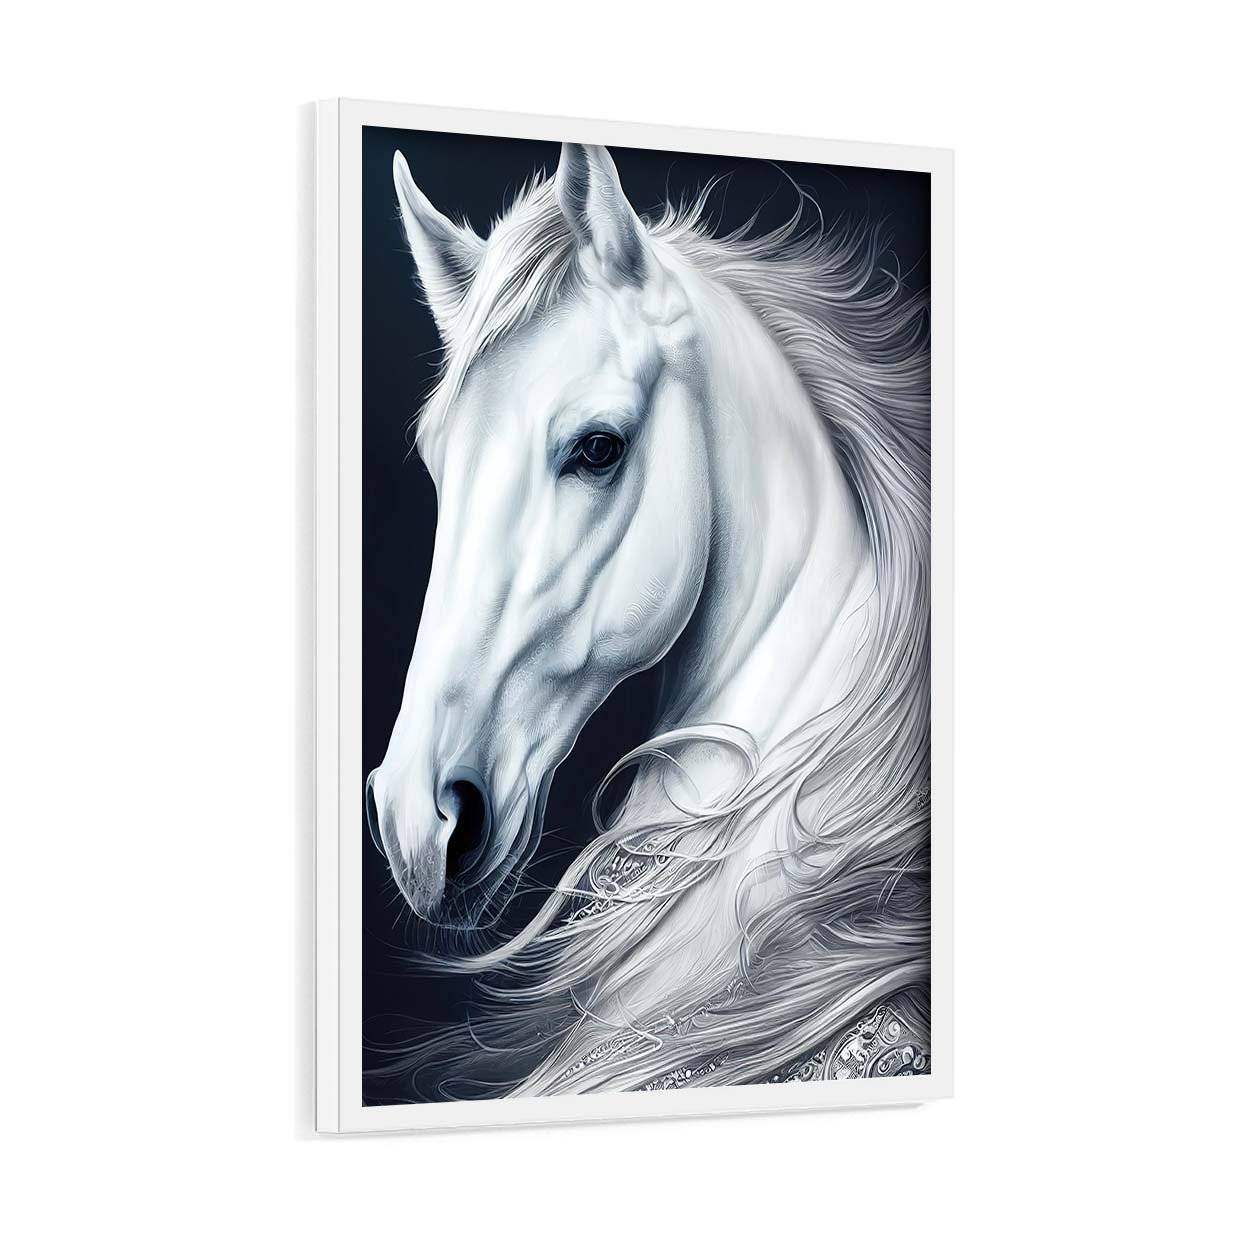 Quadro Decorativo Cavalo Branco Longa Crina 40x60 c Moldura:Branca - 1